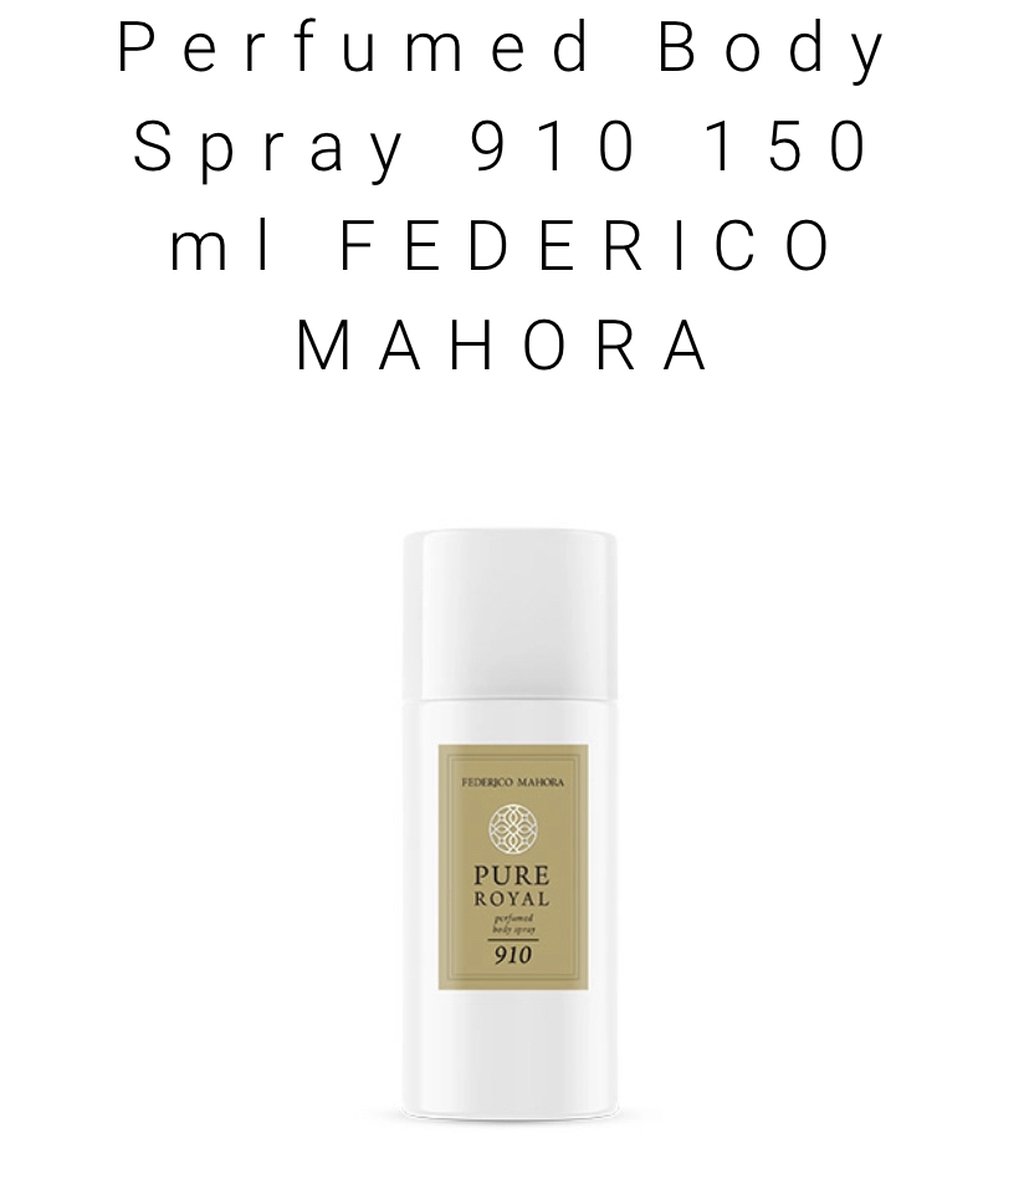 Perfumed body spray 910